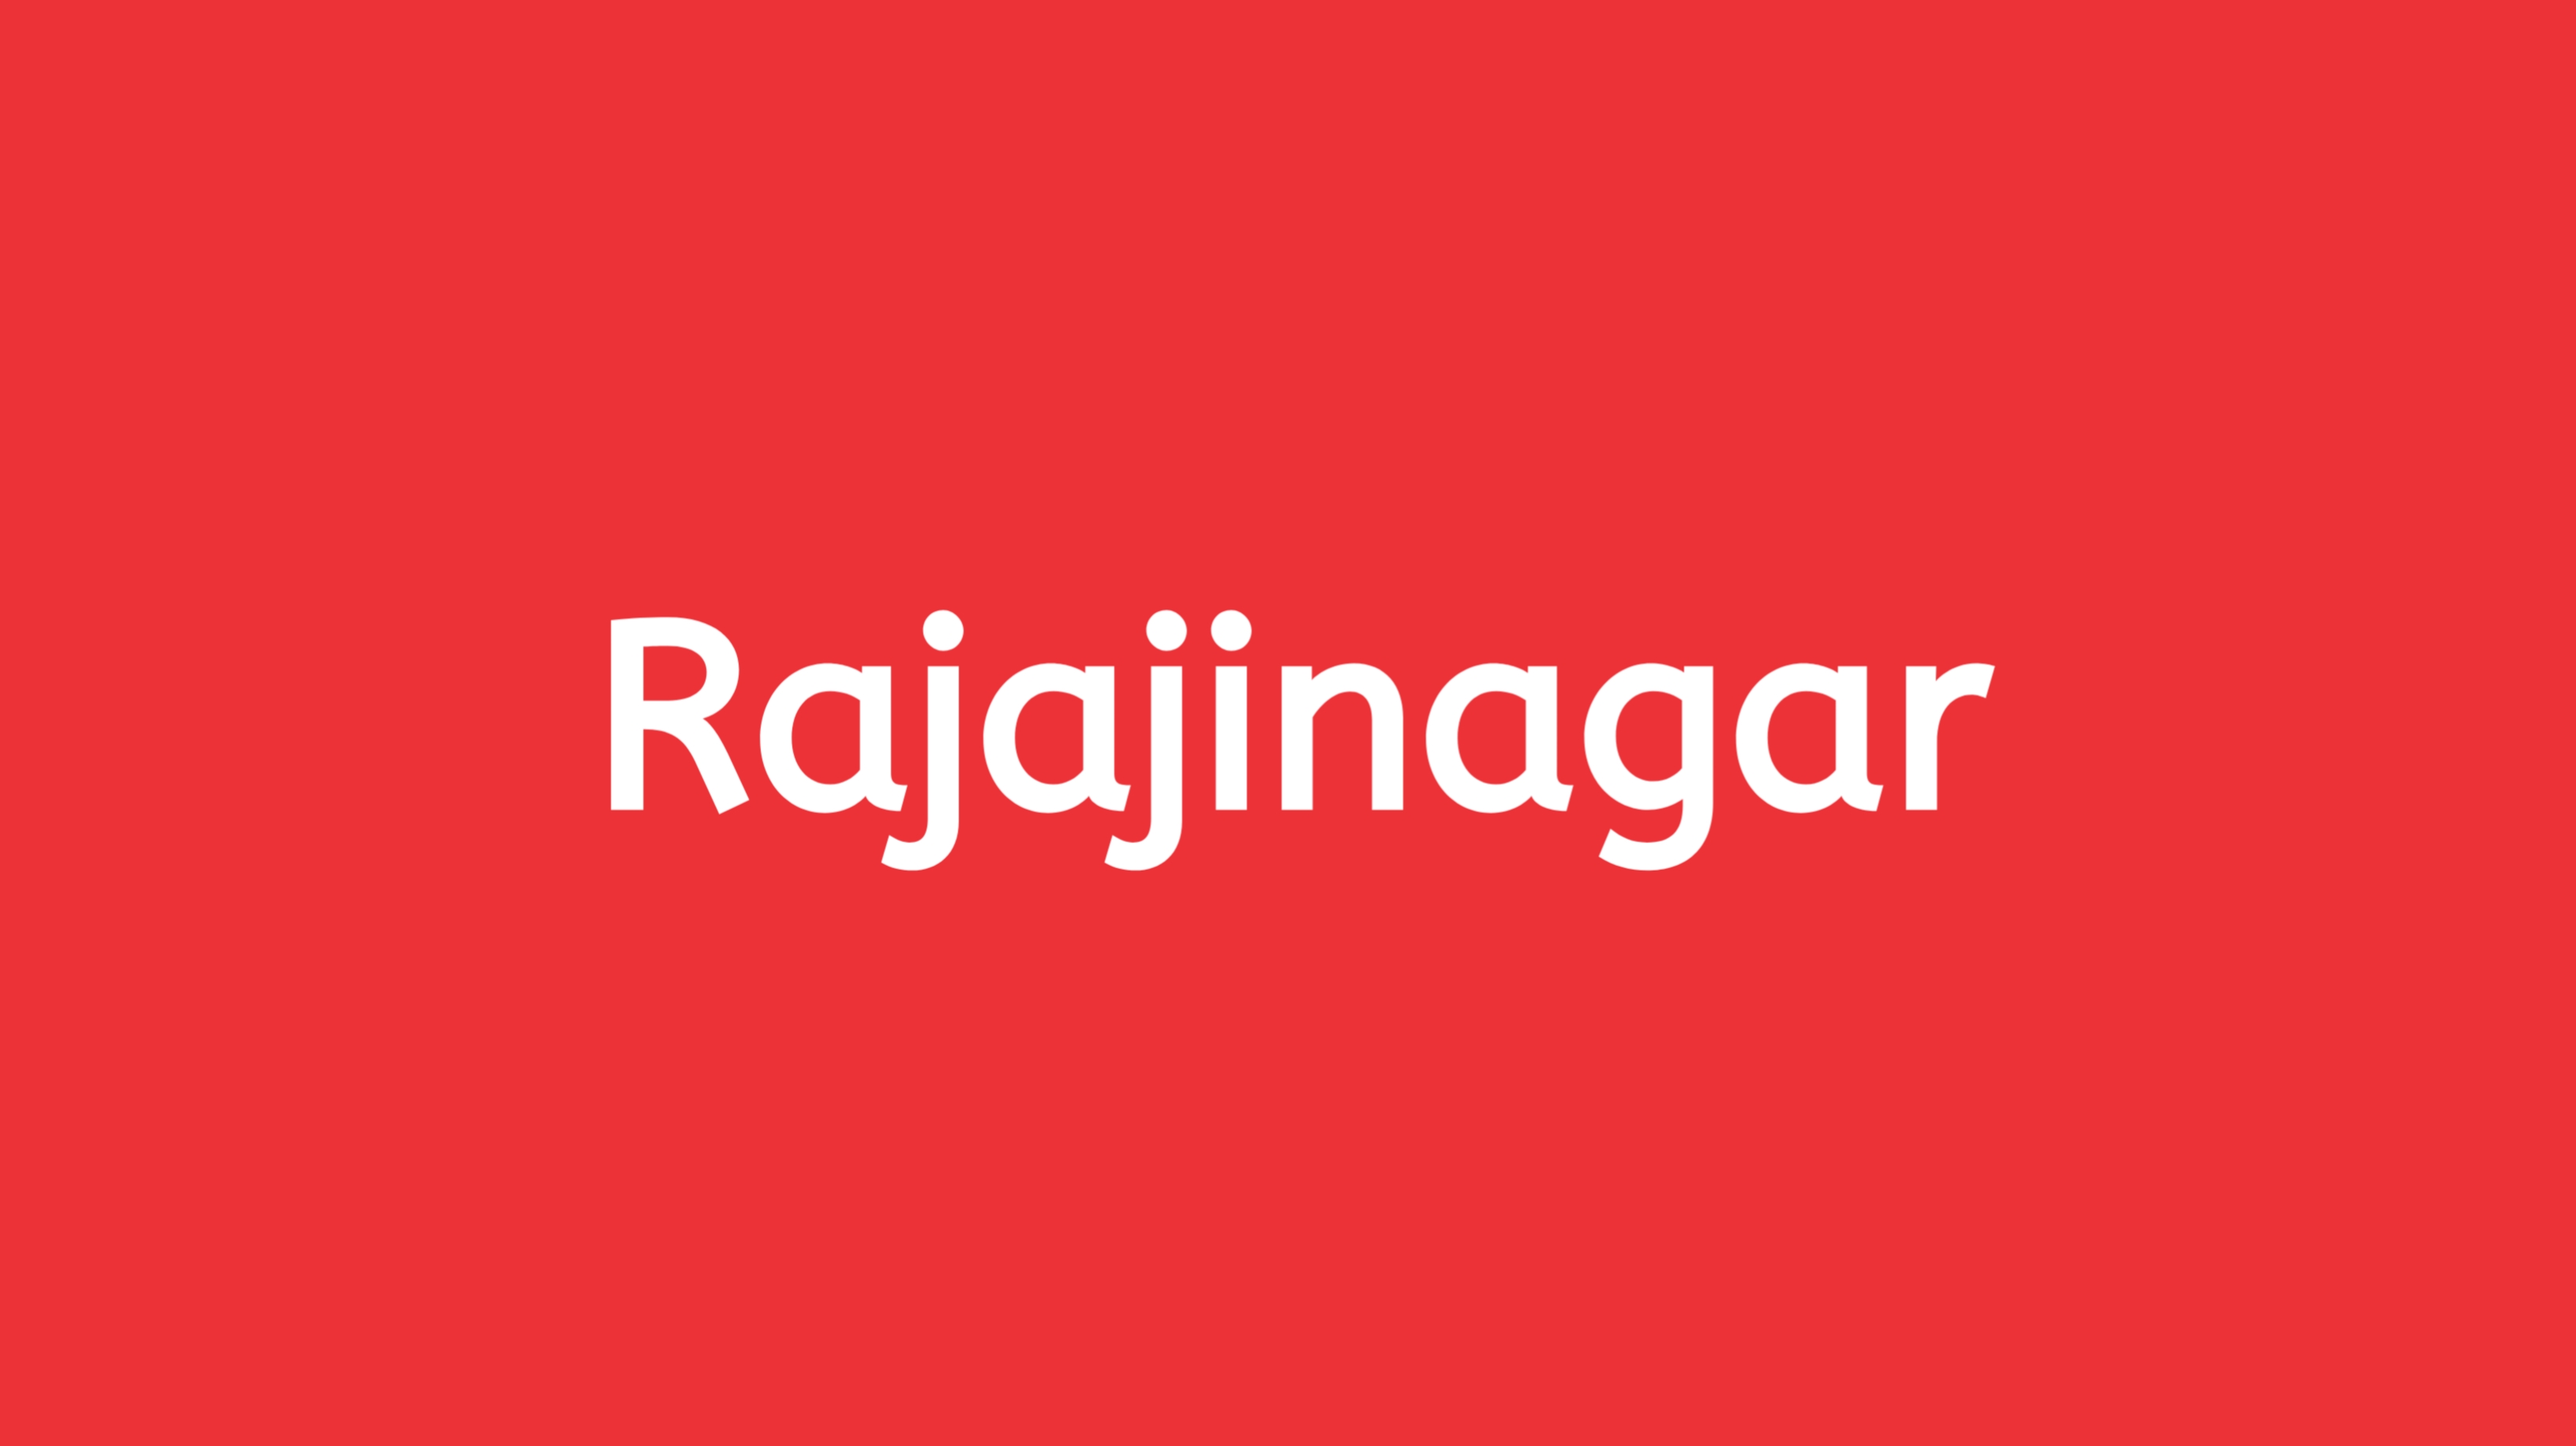 StayFit -Rajajinagar